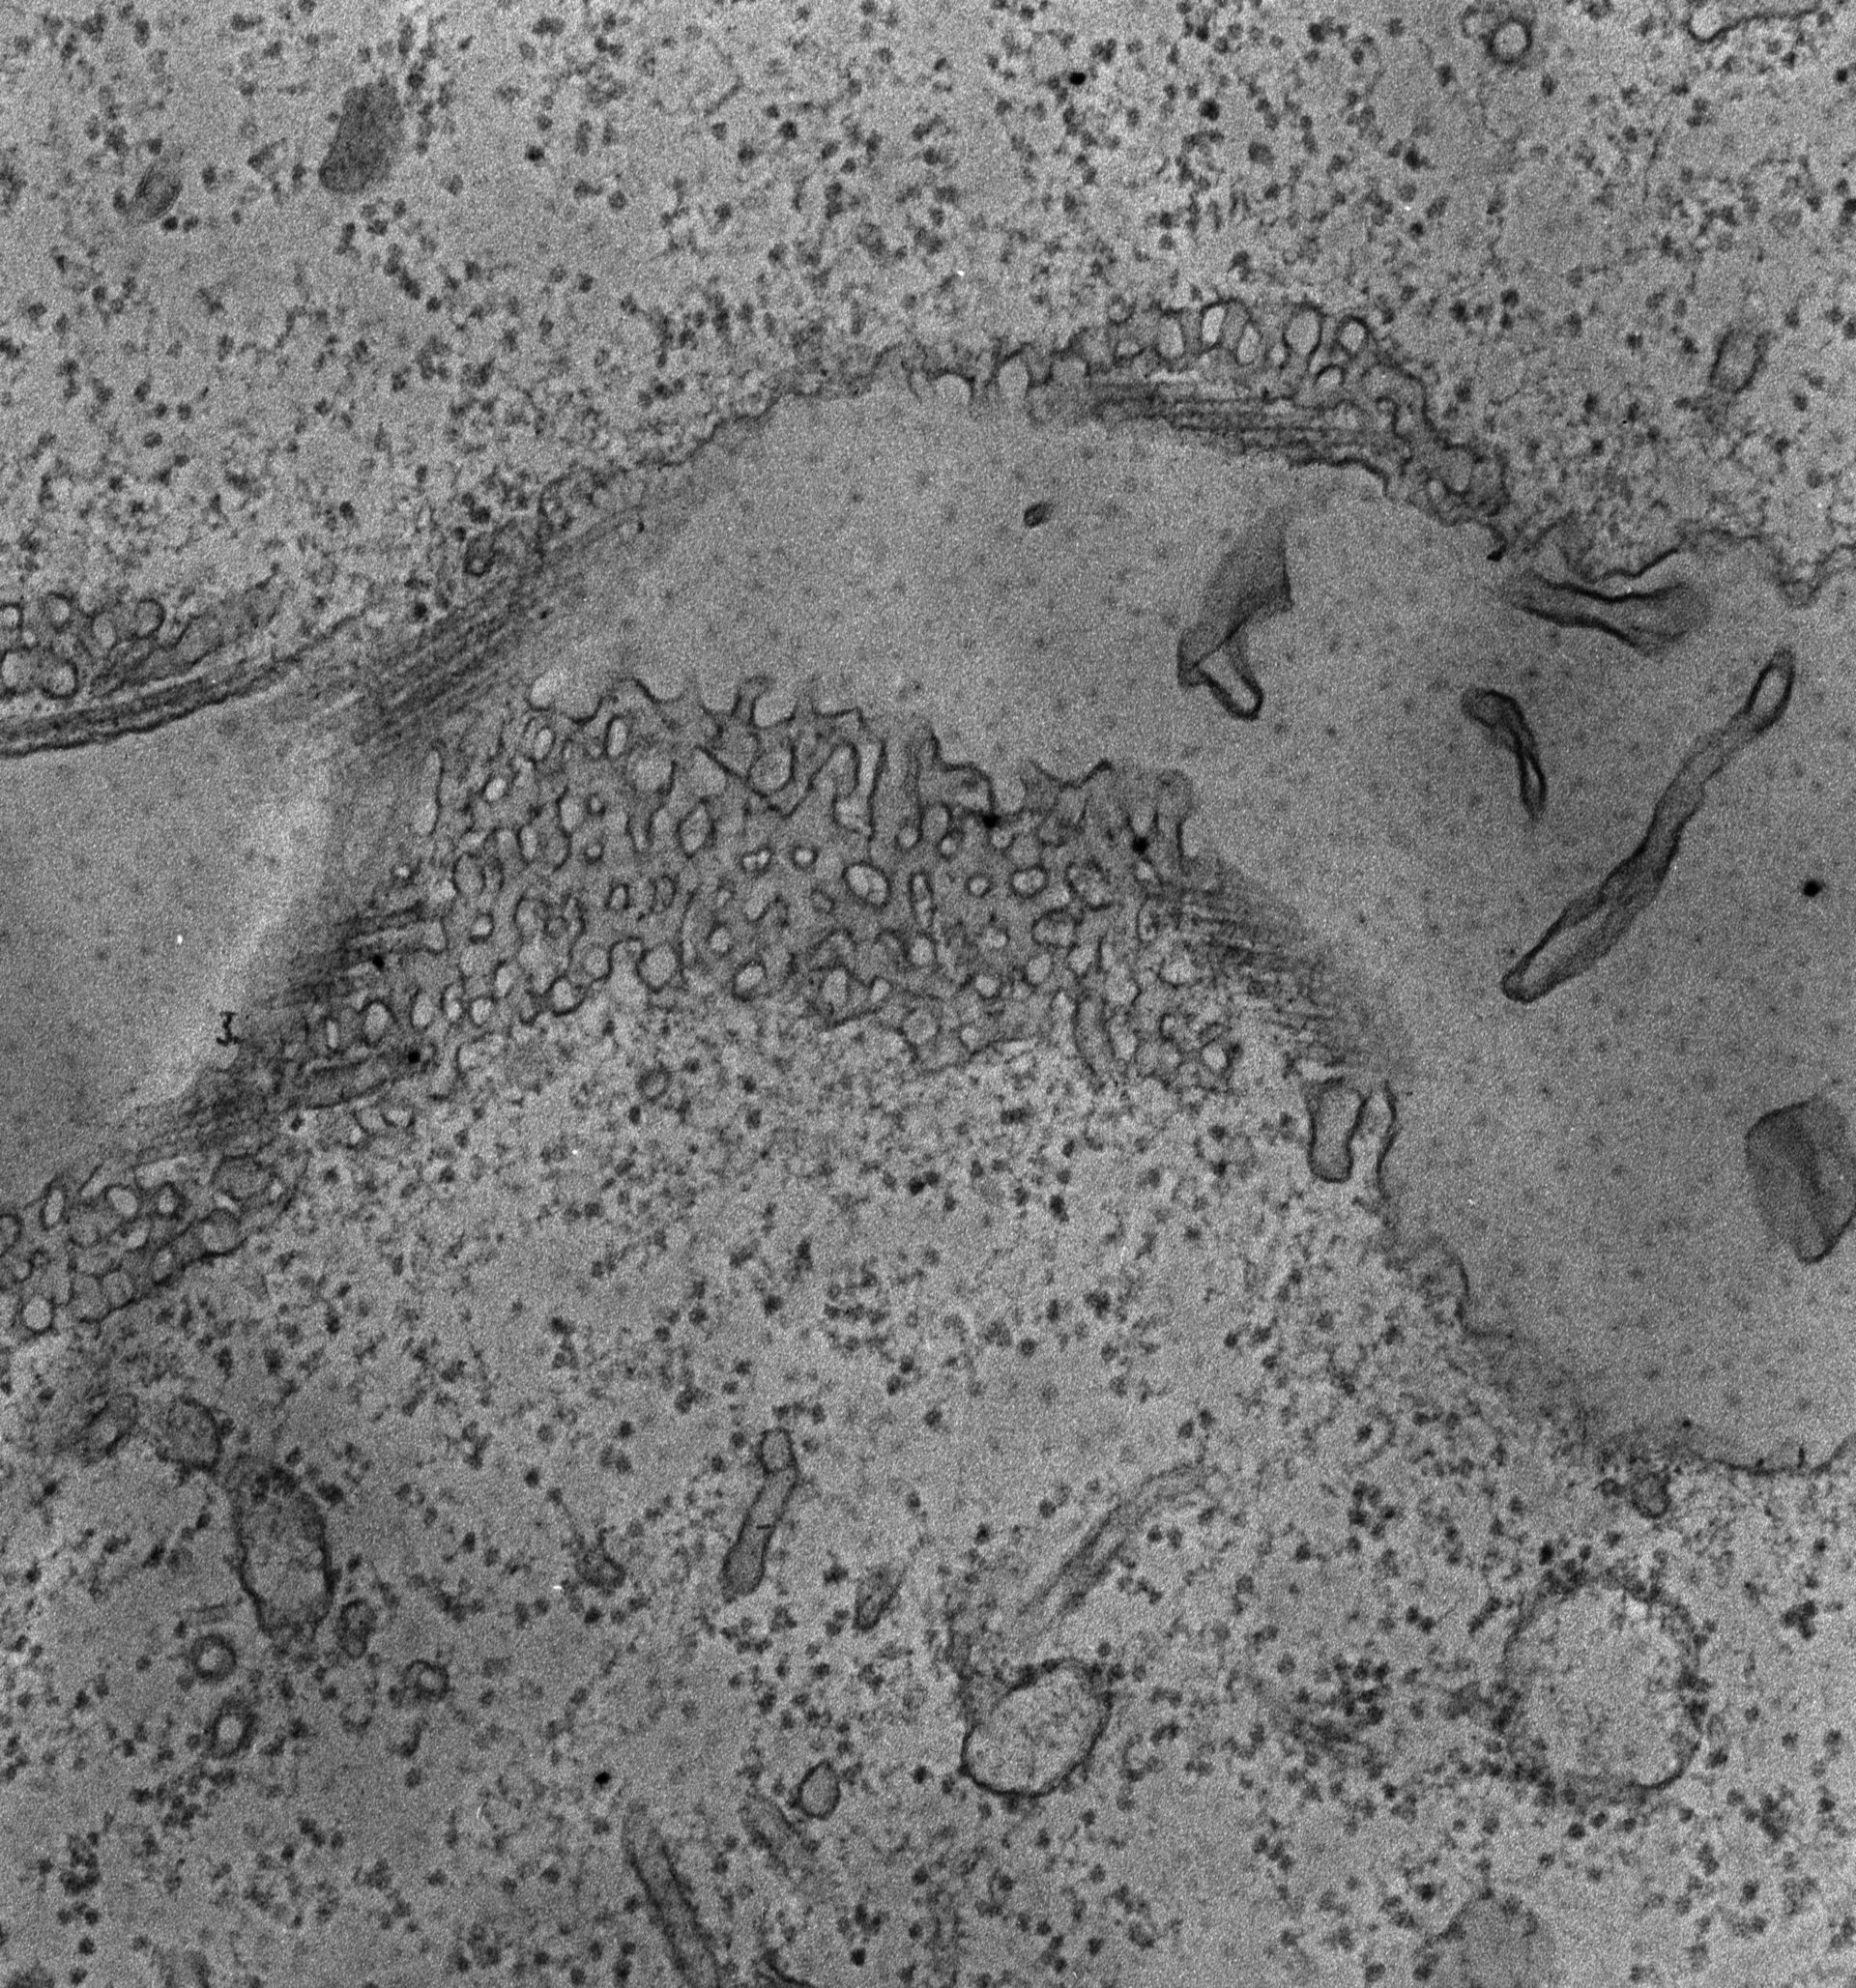 Paramecium multimicronucleatum (Cytoplasmic microtubule) - CIL:13117